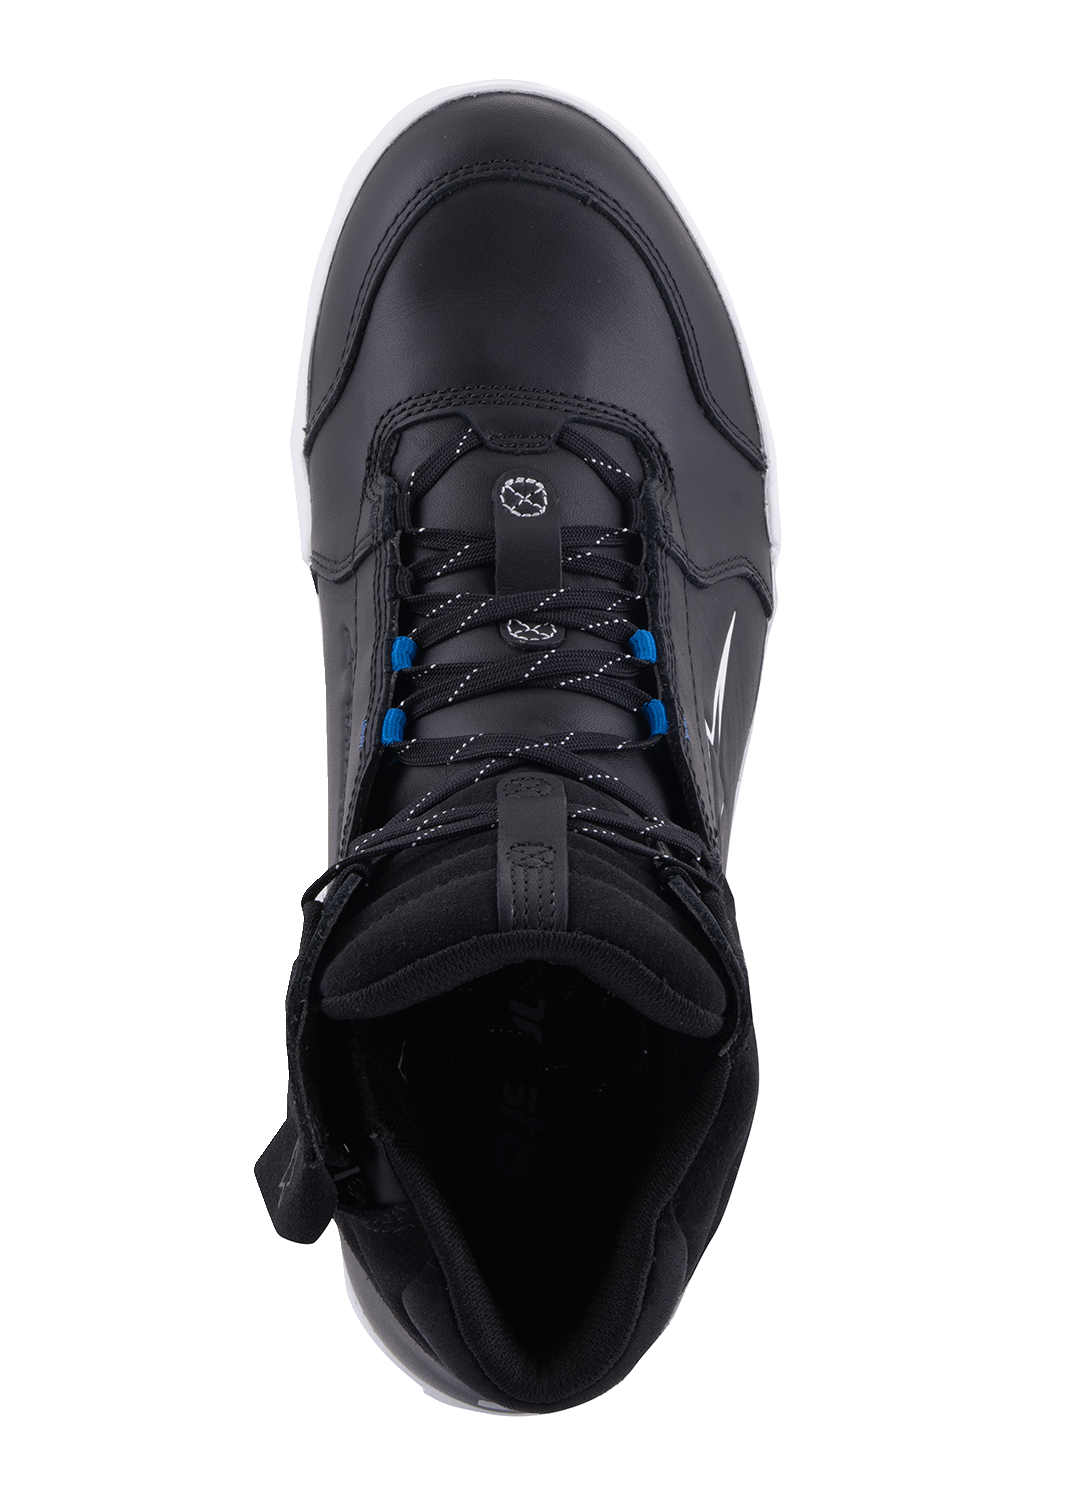 ALPINESTARS Chrome Shoes - Waterproof - Black/White - US 12 2543123-157-12 - Electrek Moto